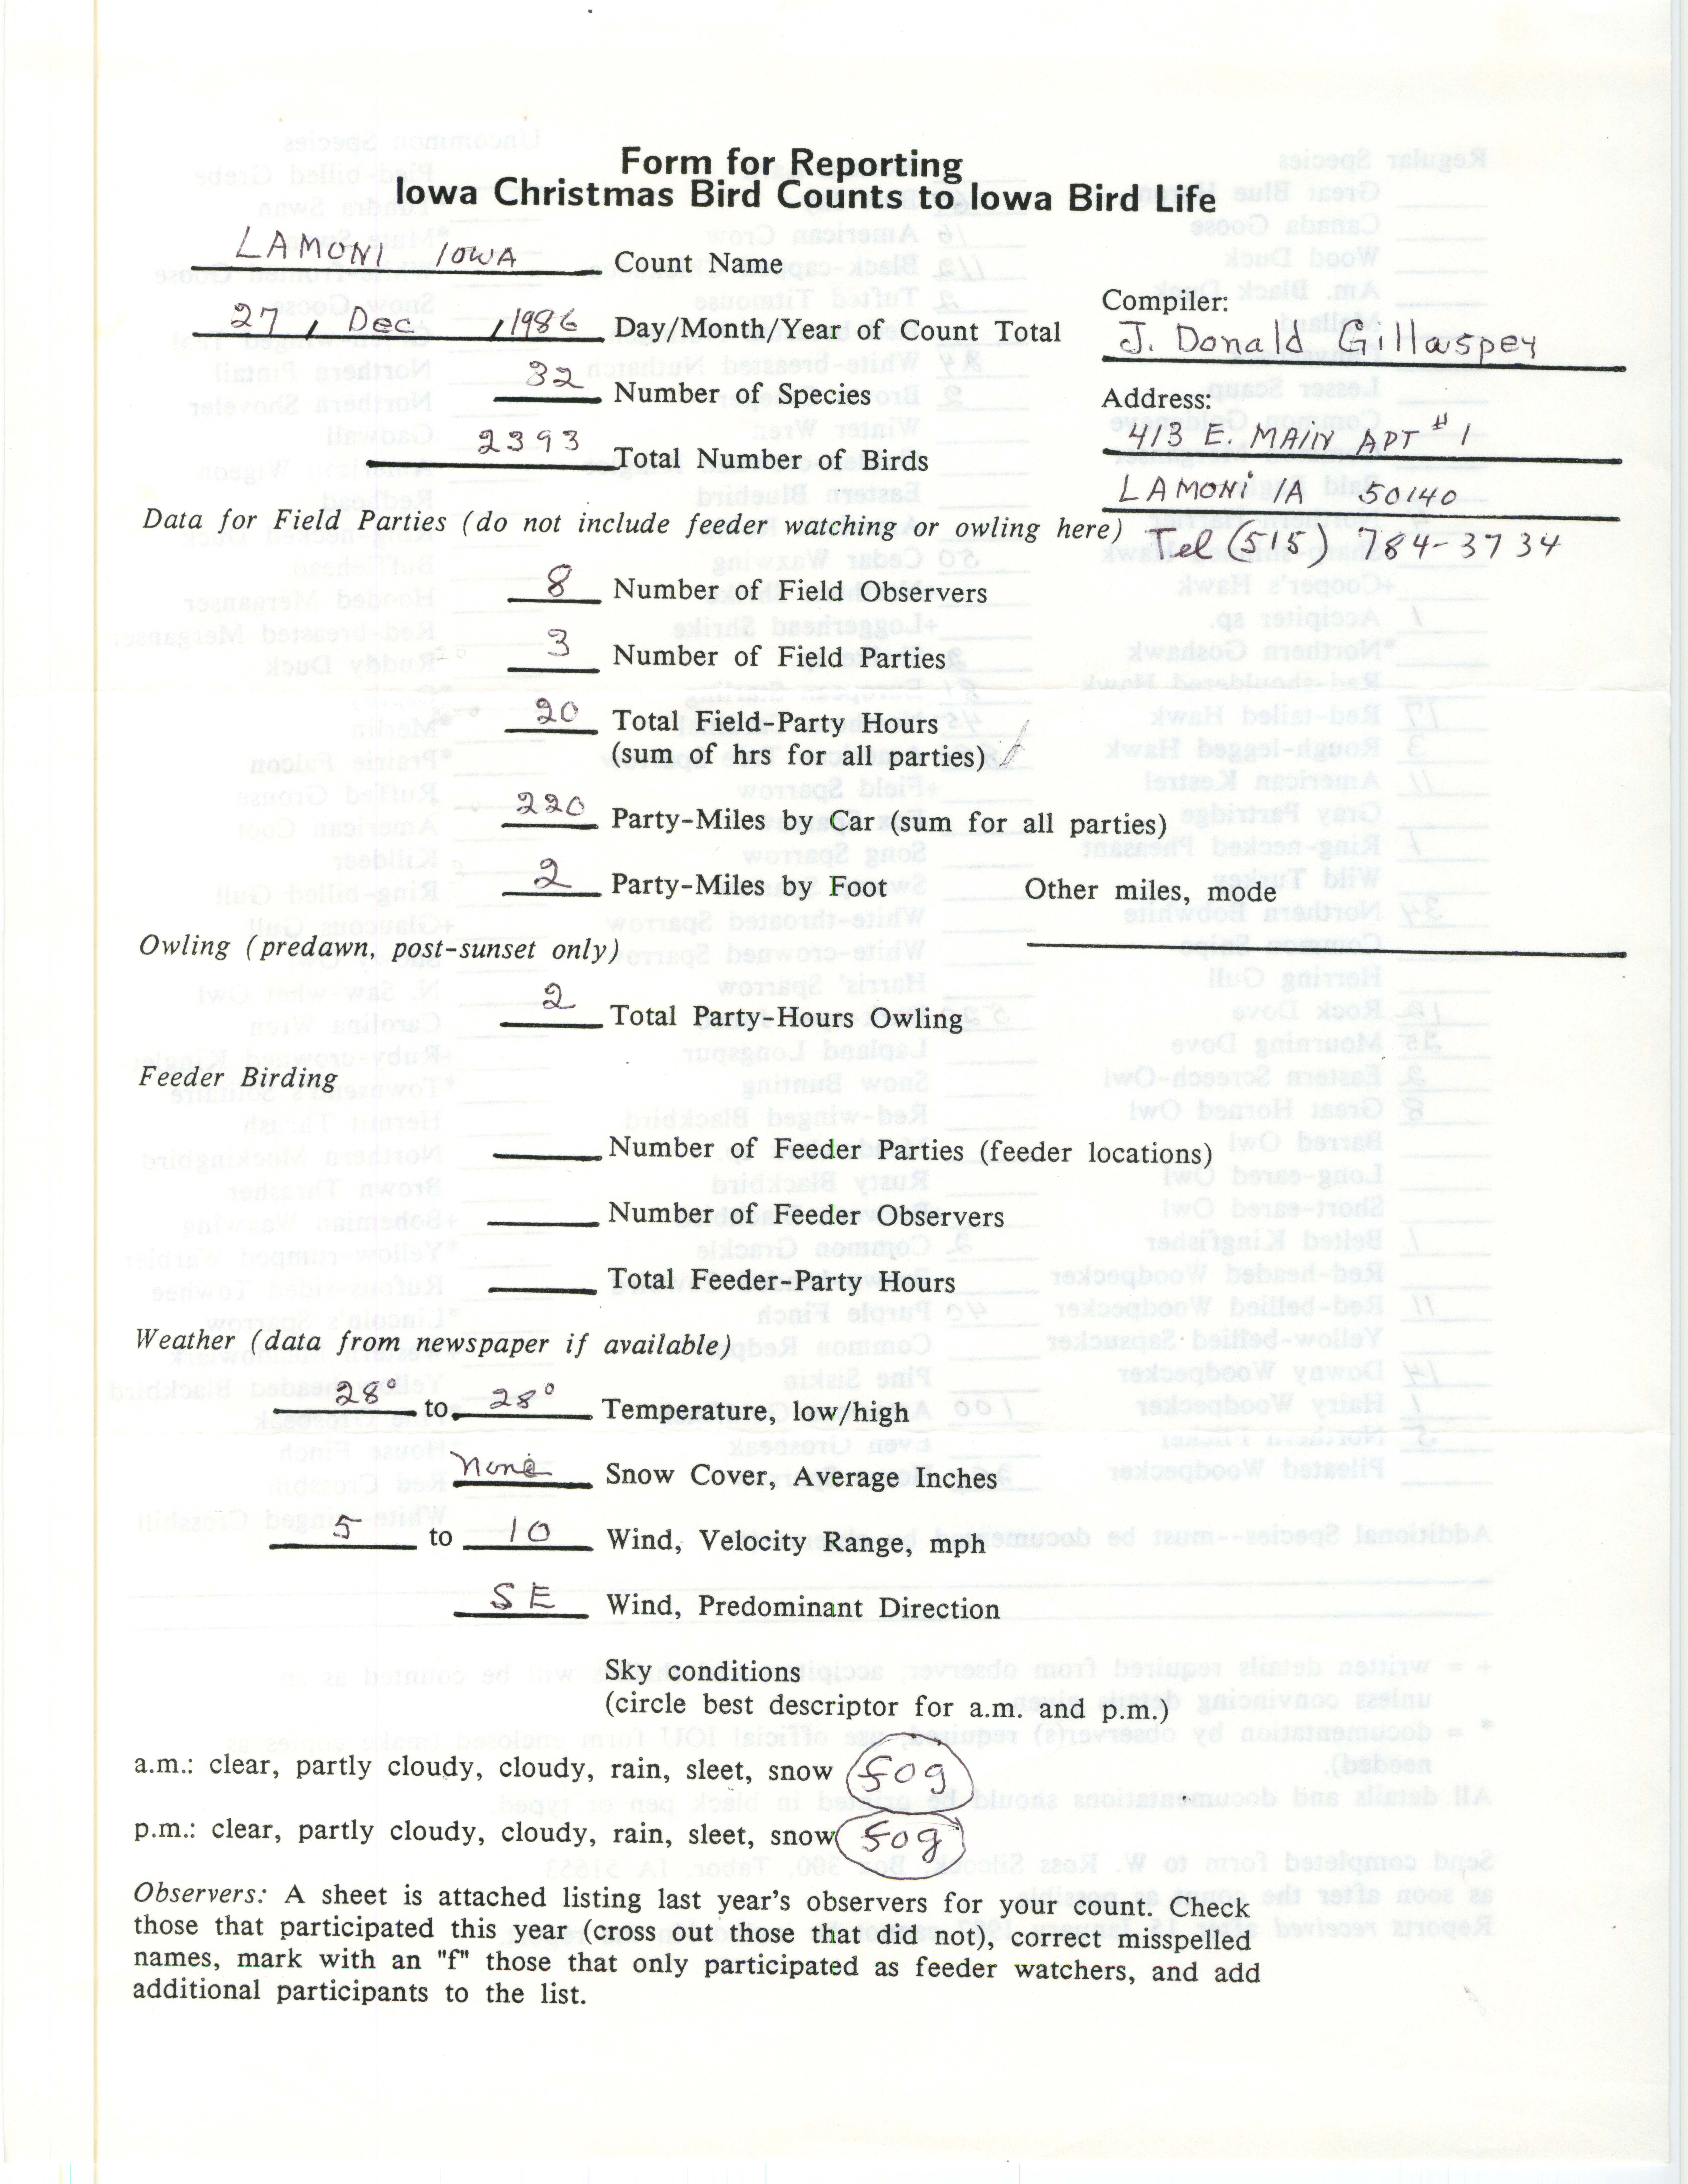 Form for reporting Iowa Christmas bird counts to Iowa Bird Life, J. Donald Gillaspey, December 27, 1986